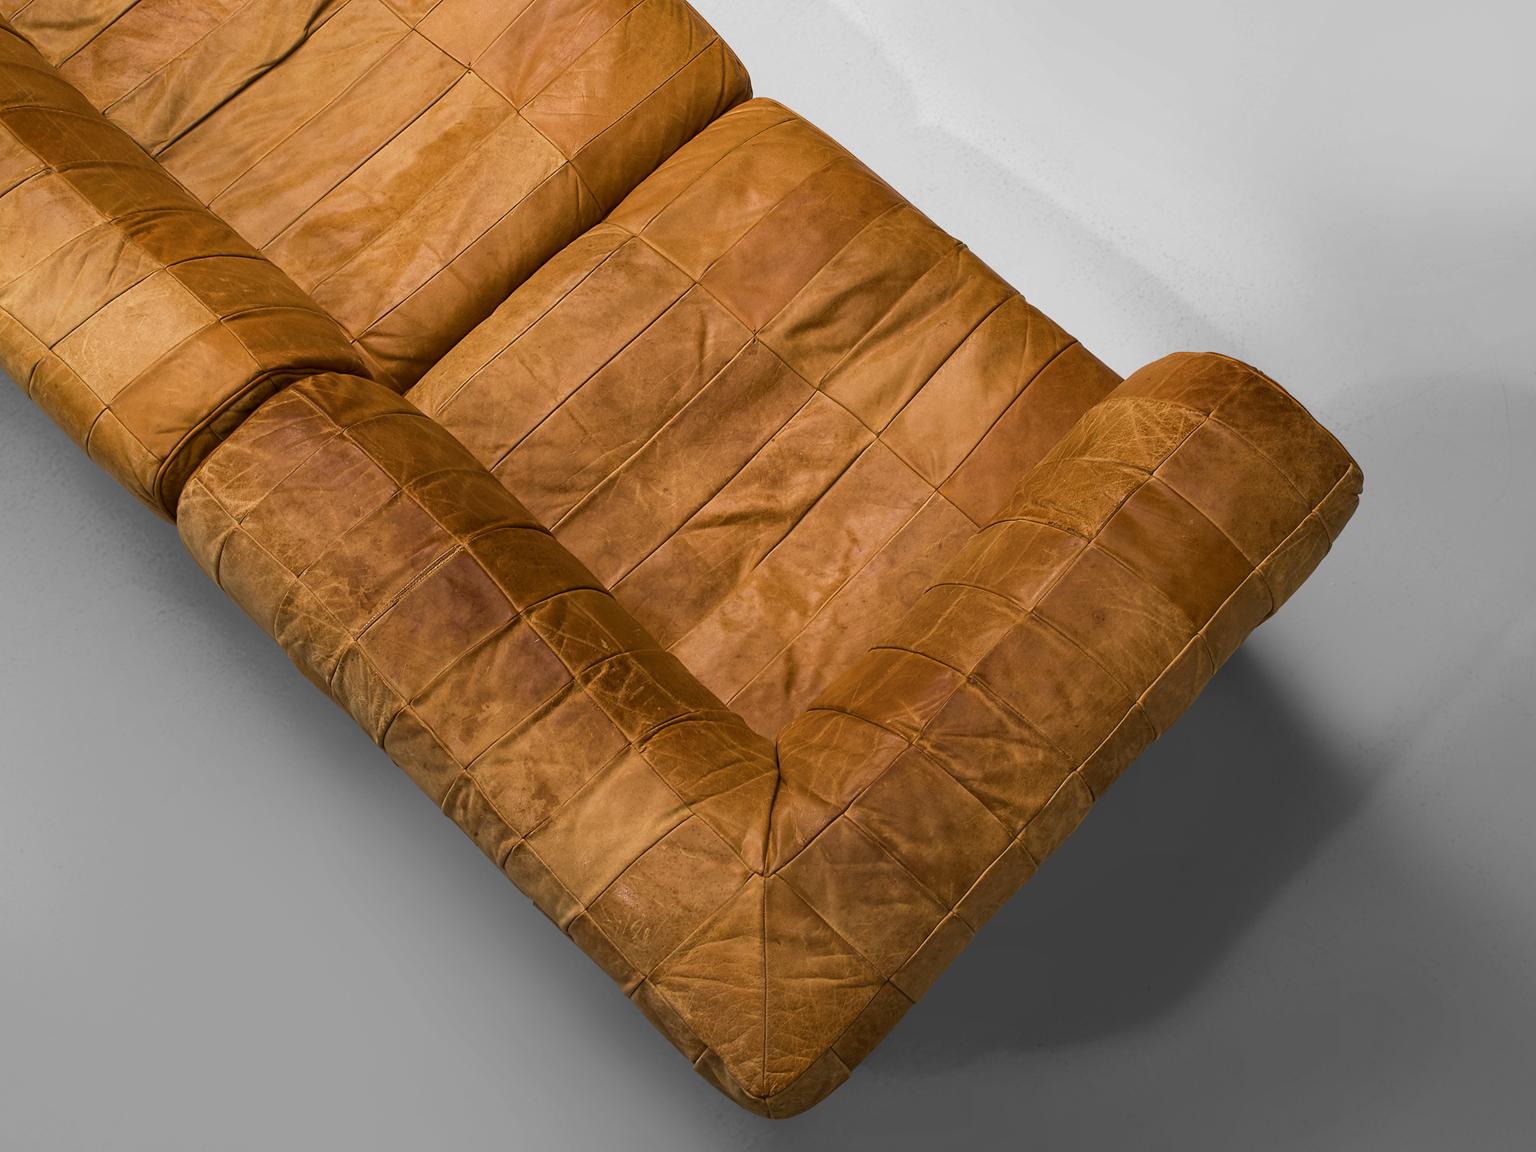 Swiss De Sede DS88 Cognac Leather Sofa for De Sede